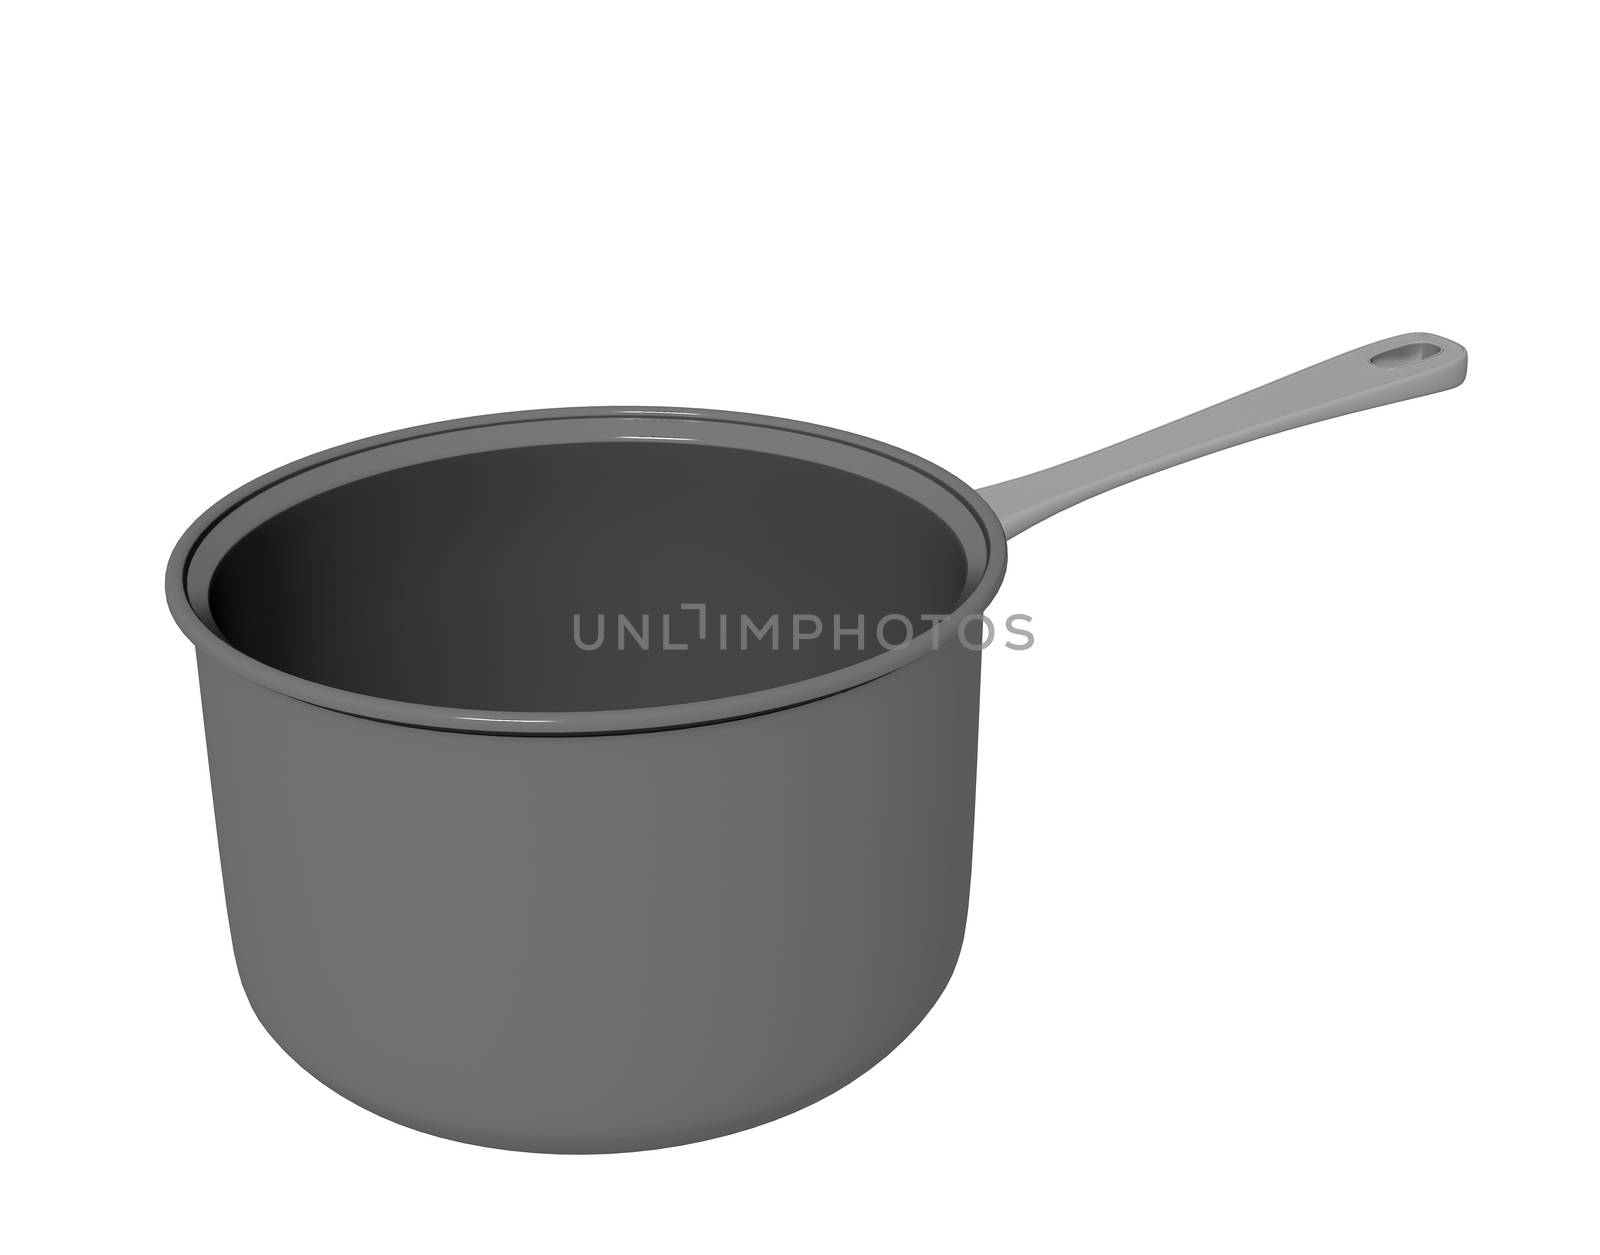 Black teflon coated or cast iron cooking pot, 3D illustration by Morphart